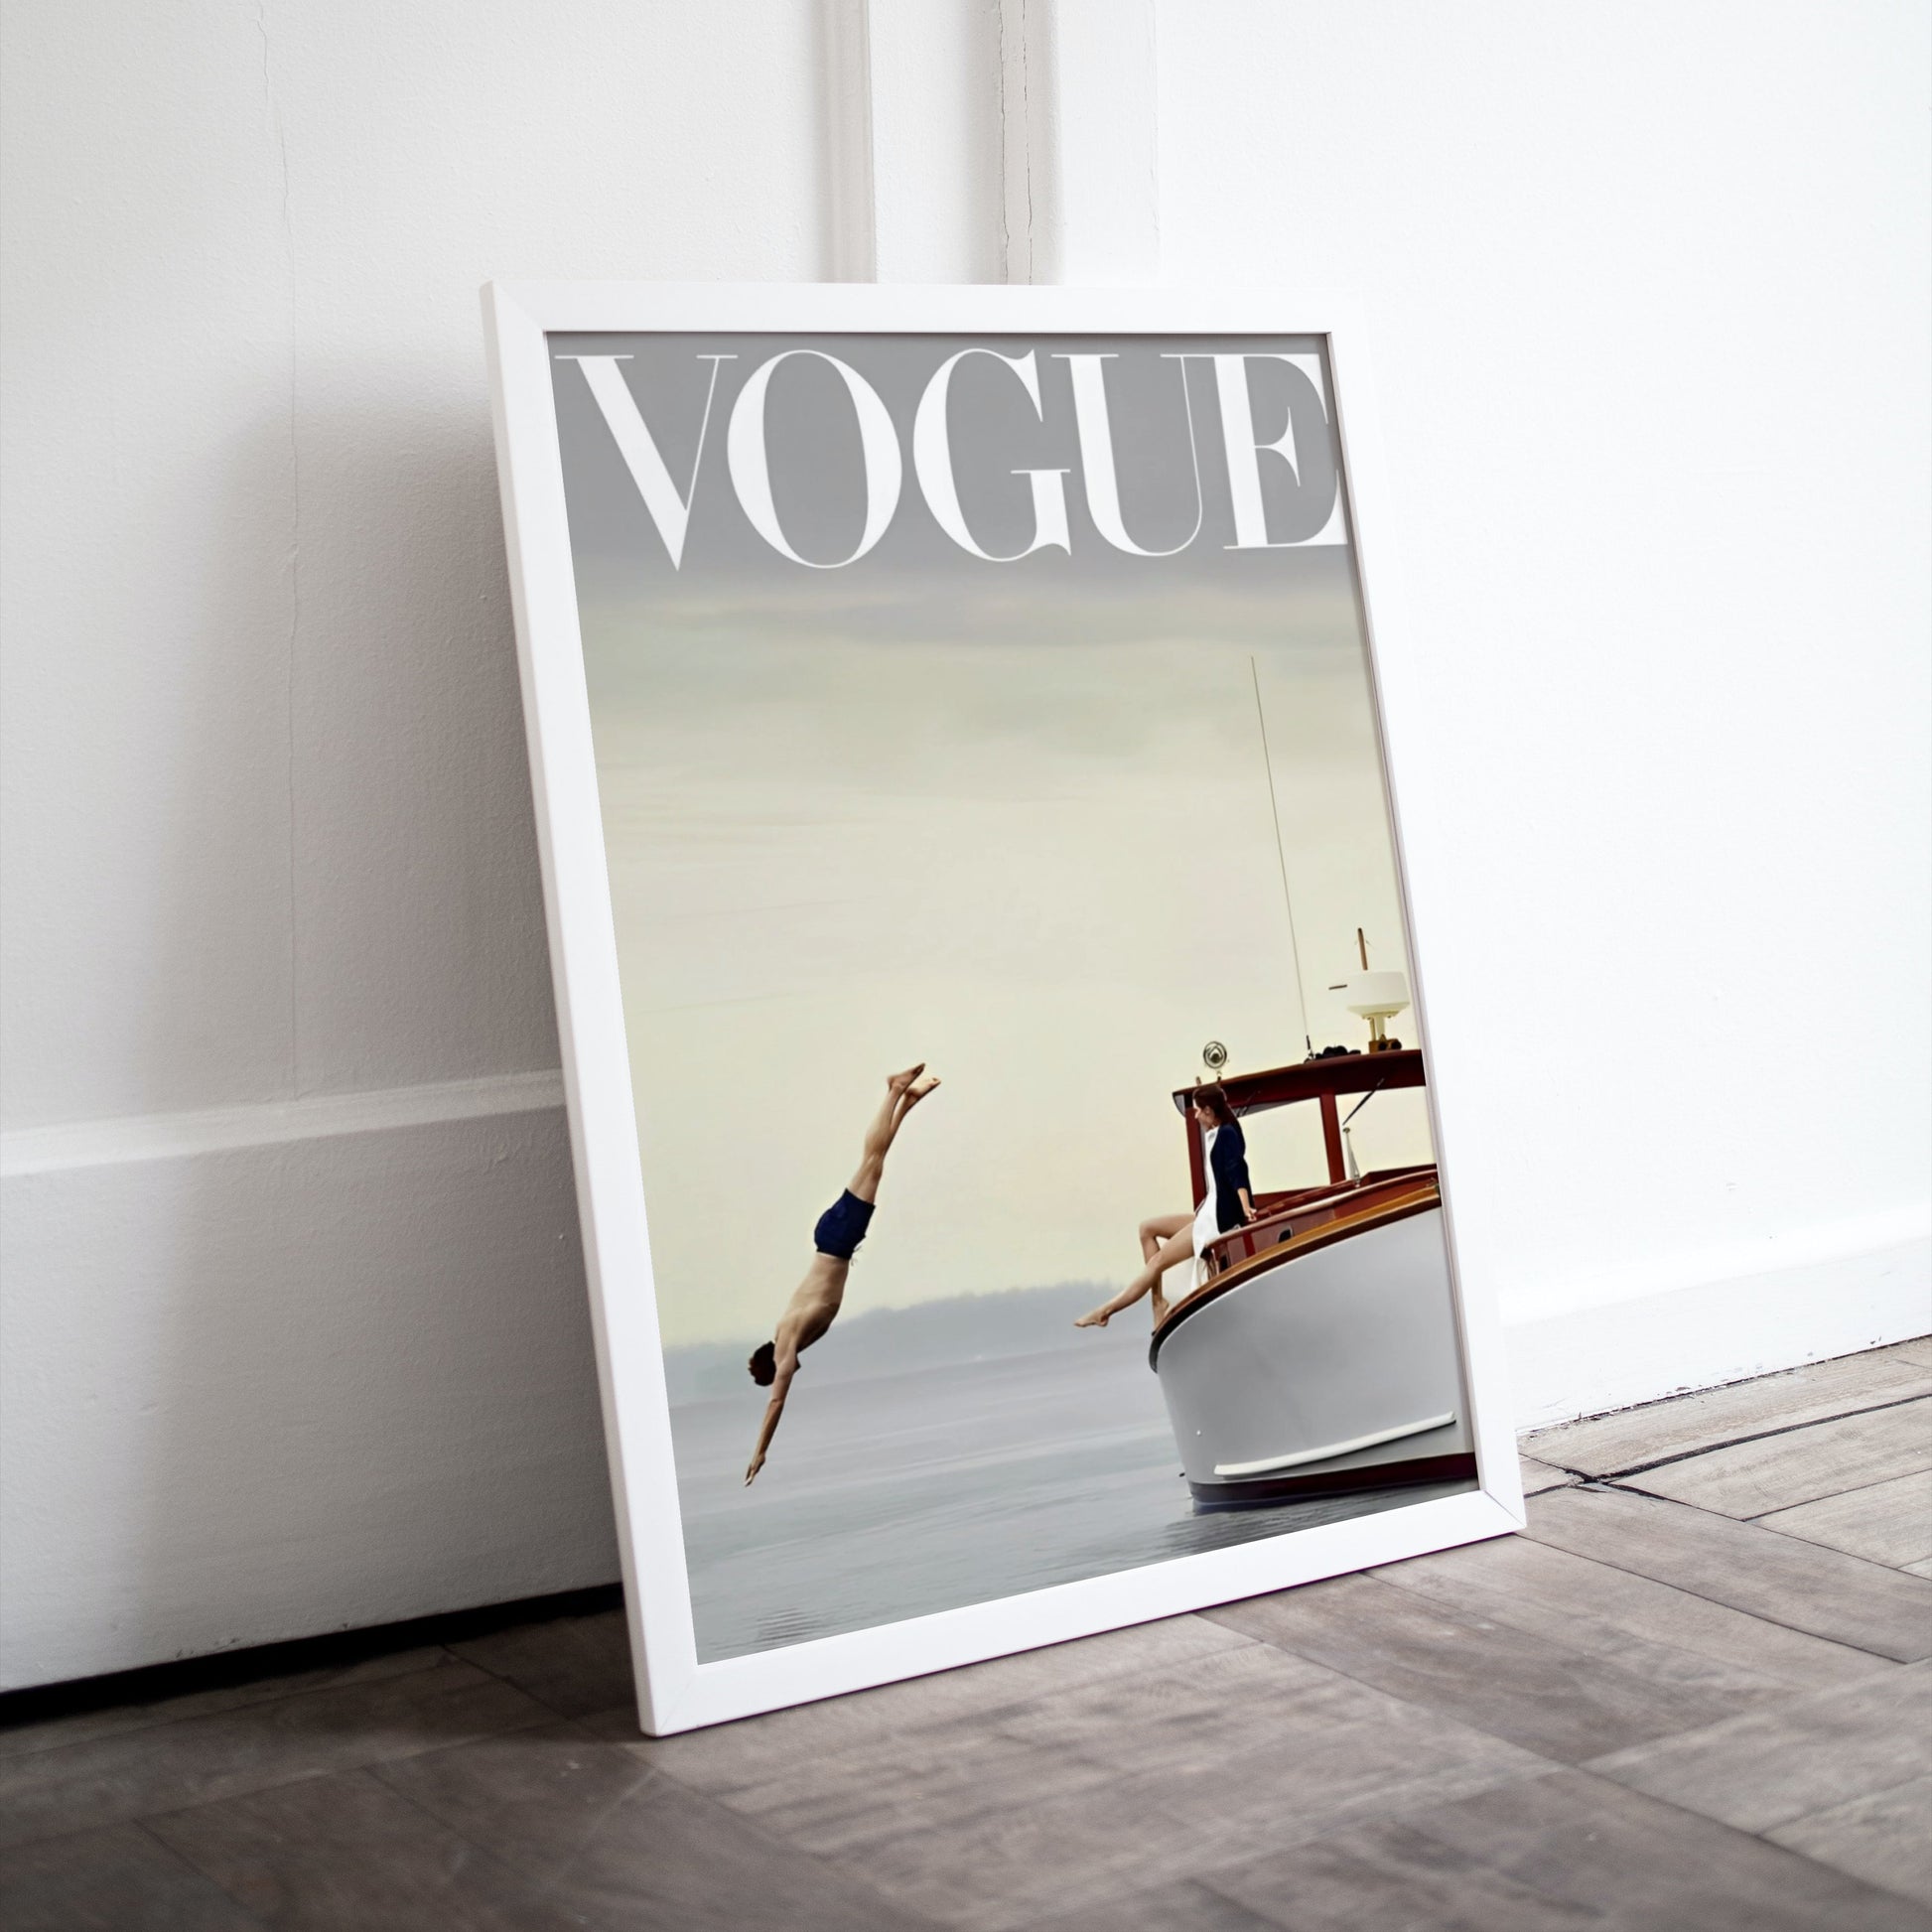 Vogue Poster INSTANT DOWNLOAD, Fashion wall art, Luxury Fashion poster, Editorial print, Man jumping boat, Pastel decor, Fashion Magazine